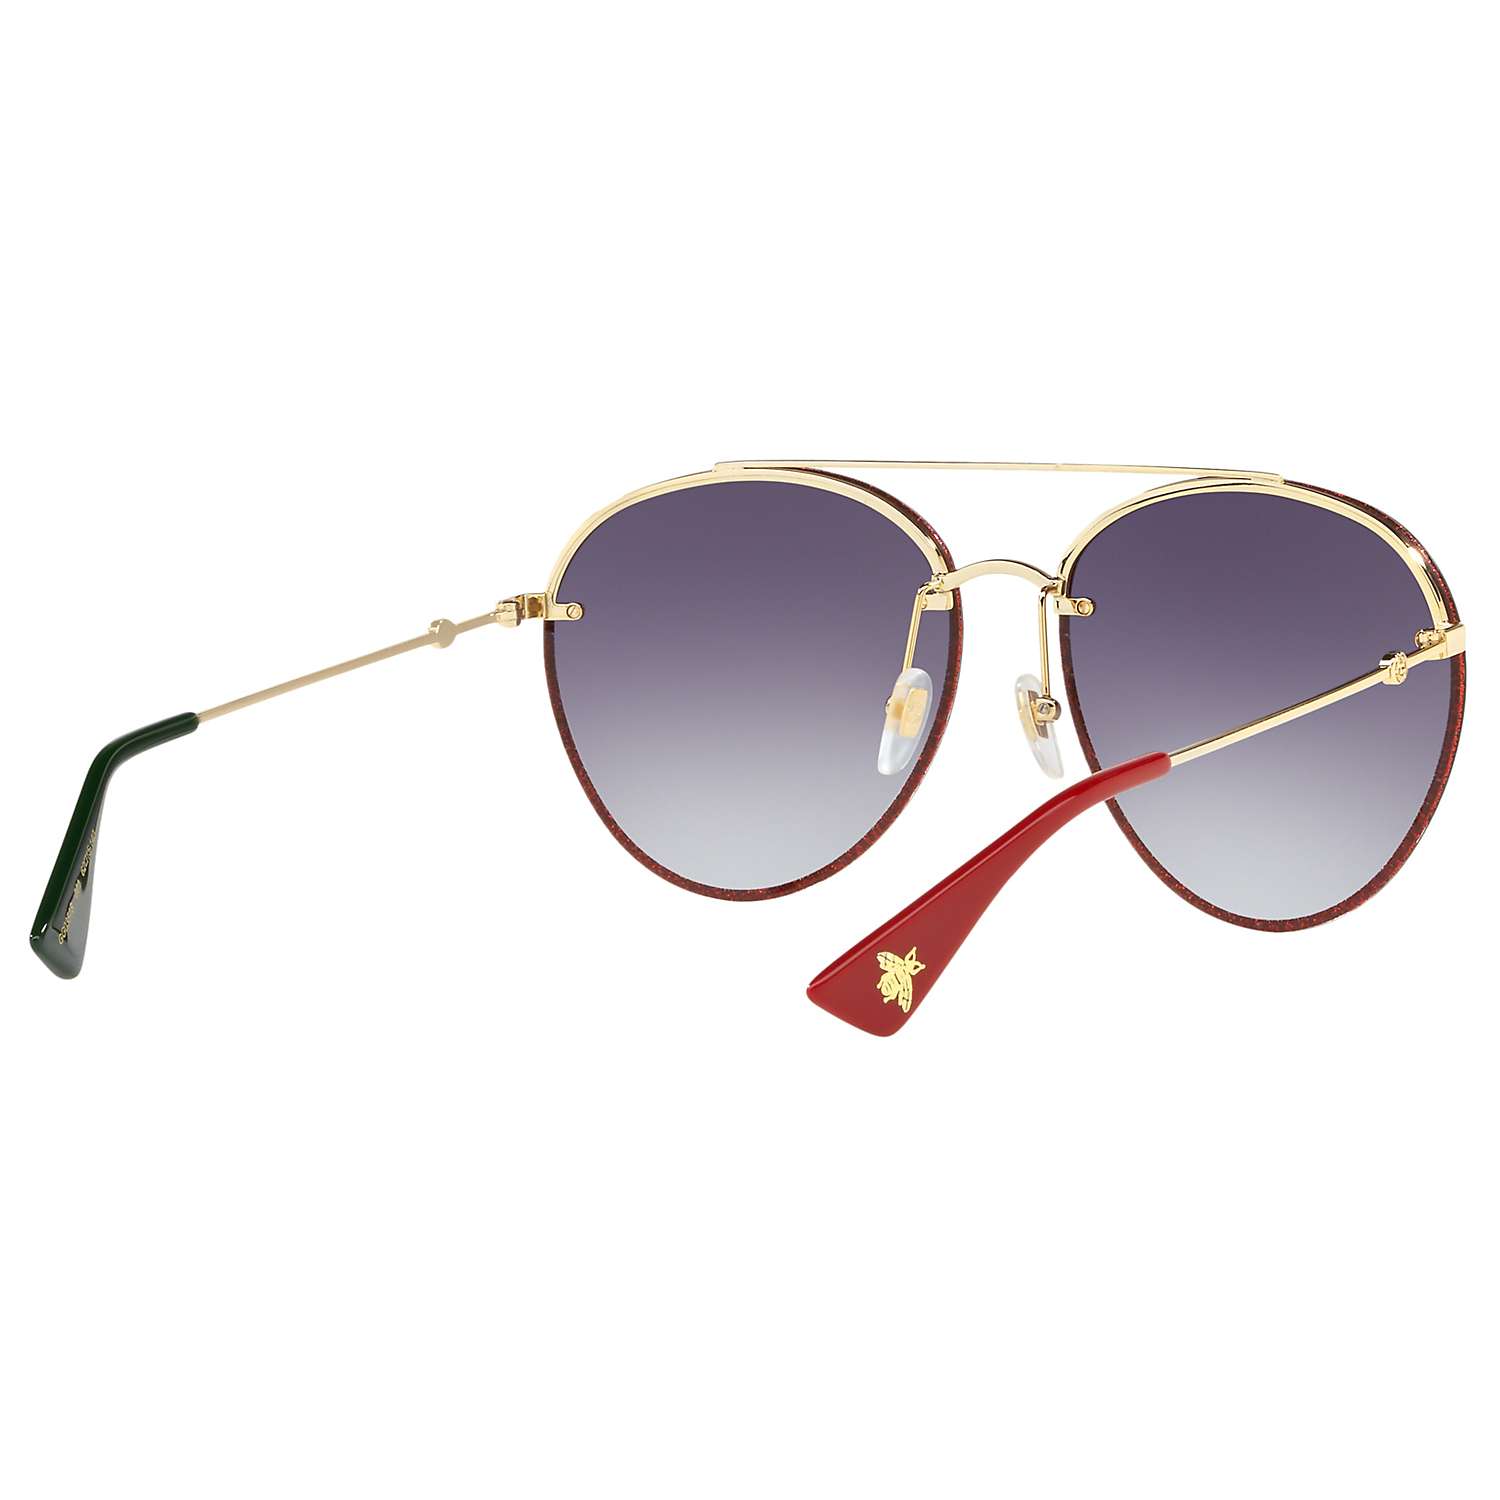 Buy Gucci GG0351S Women's Aviator Sunglasses Online at johnlewis.com